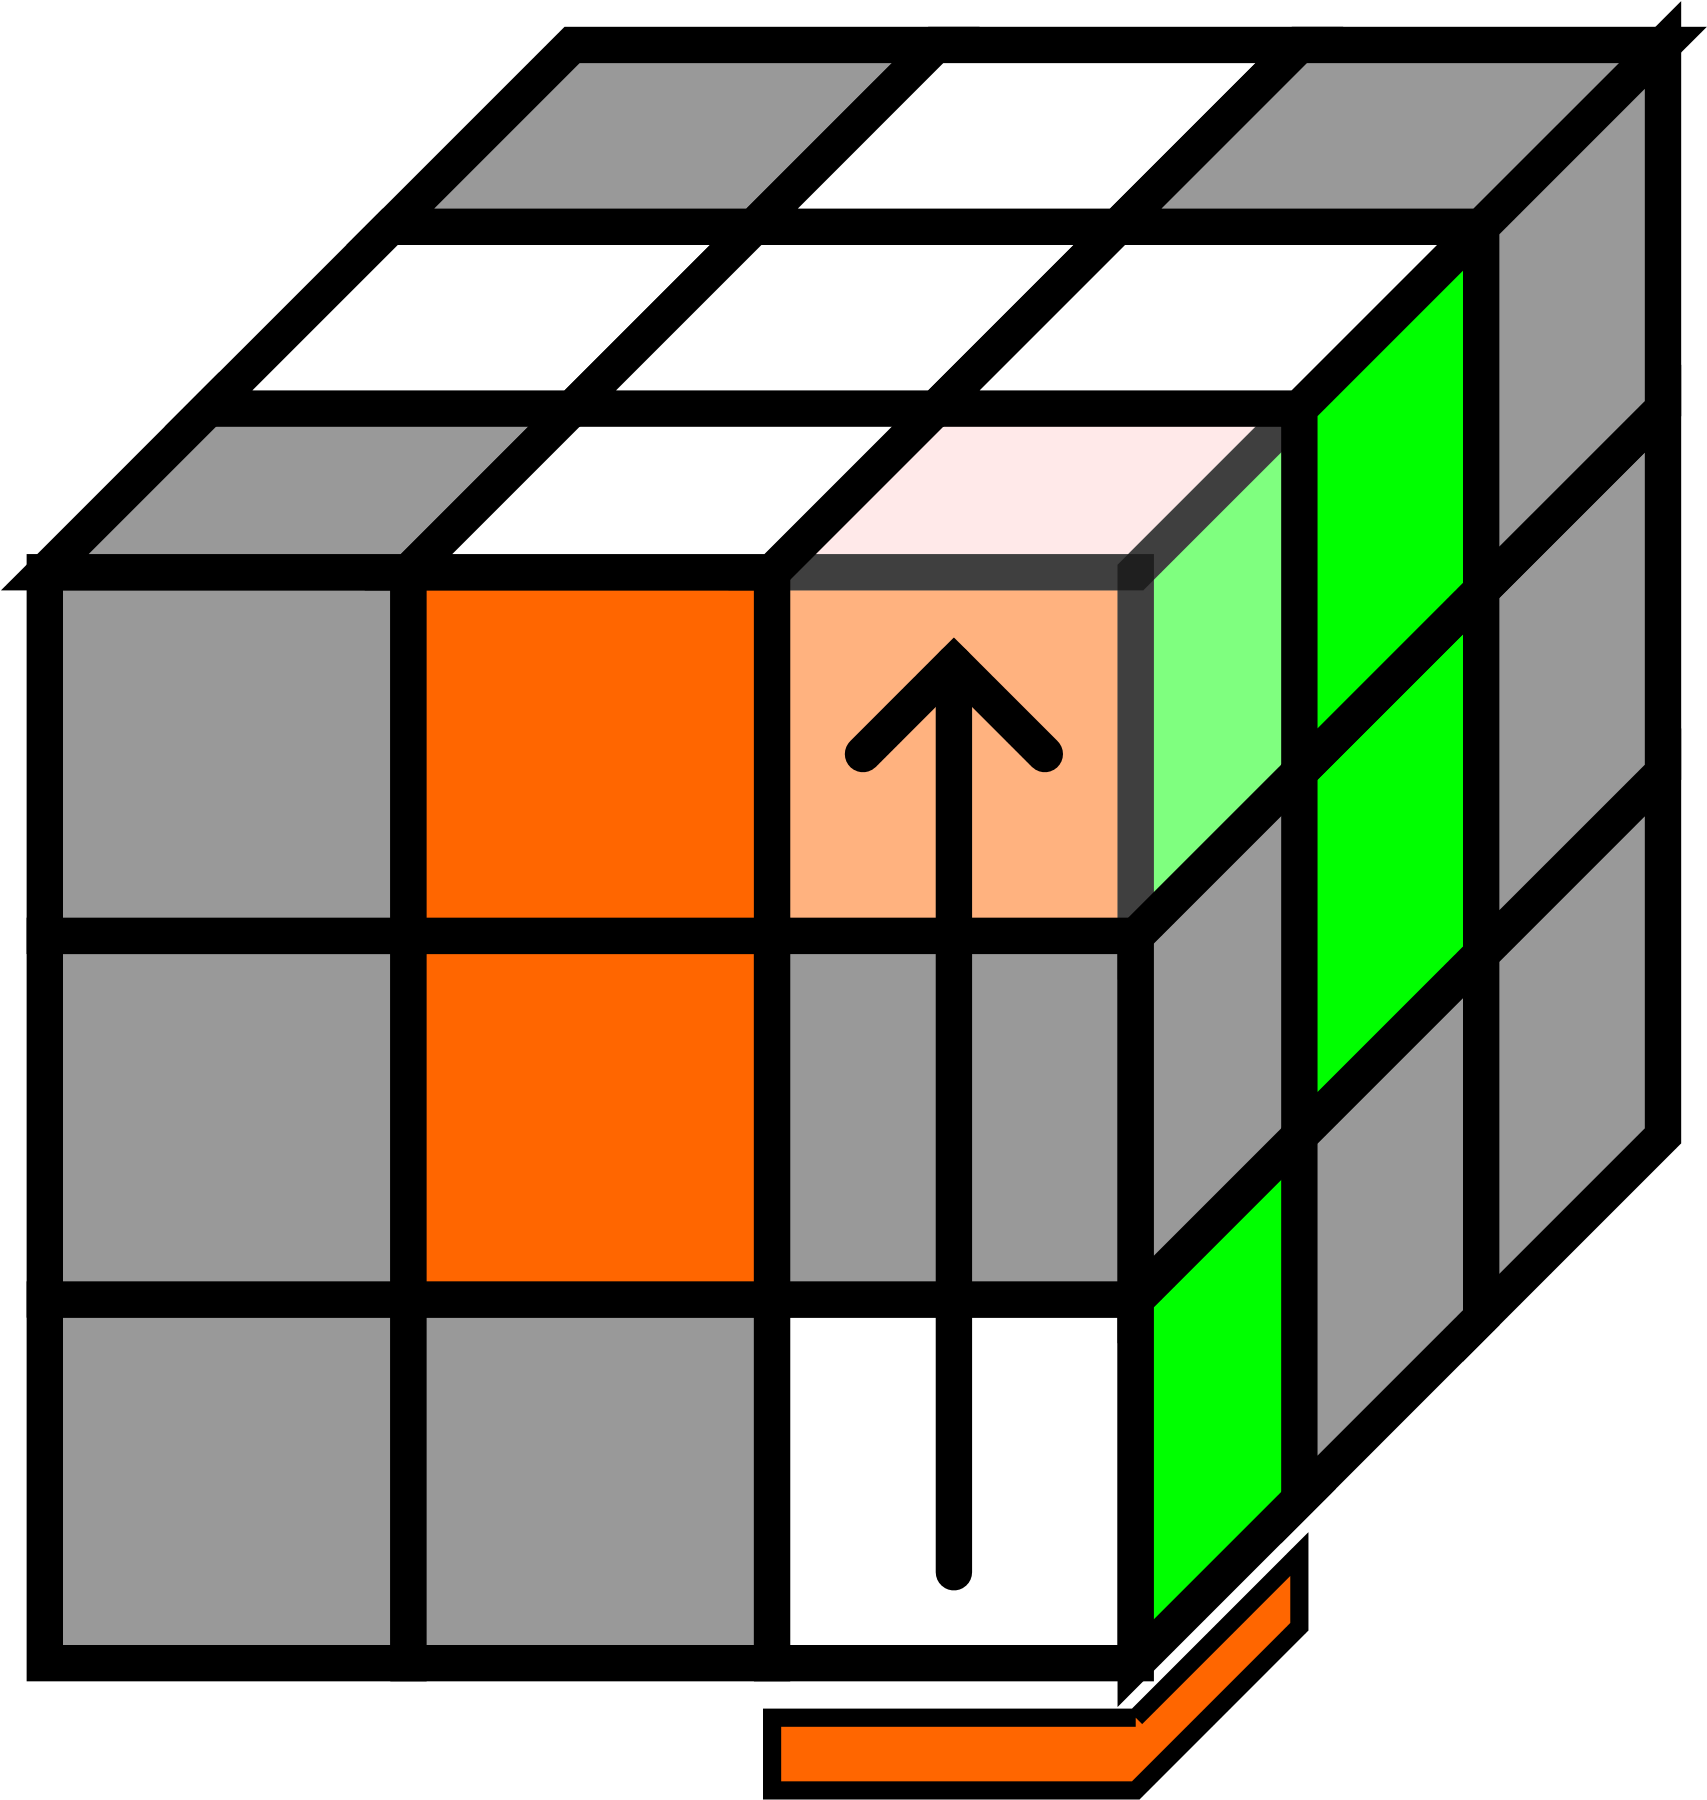 Open - Rectangular Prism With 16 Unit Cubes (2000x2000)